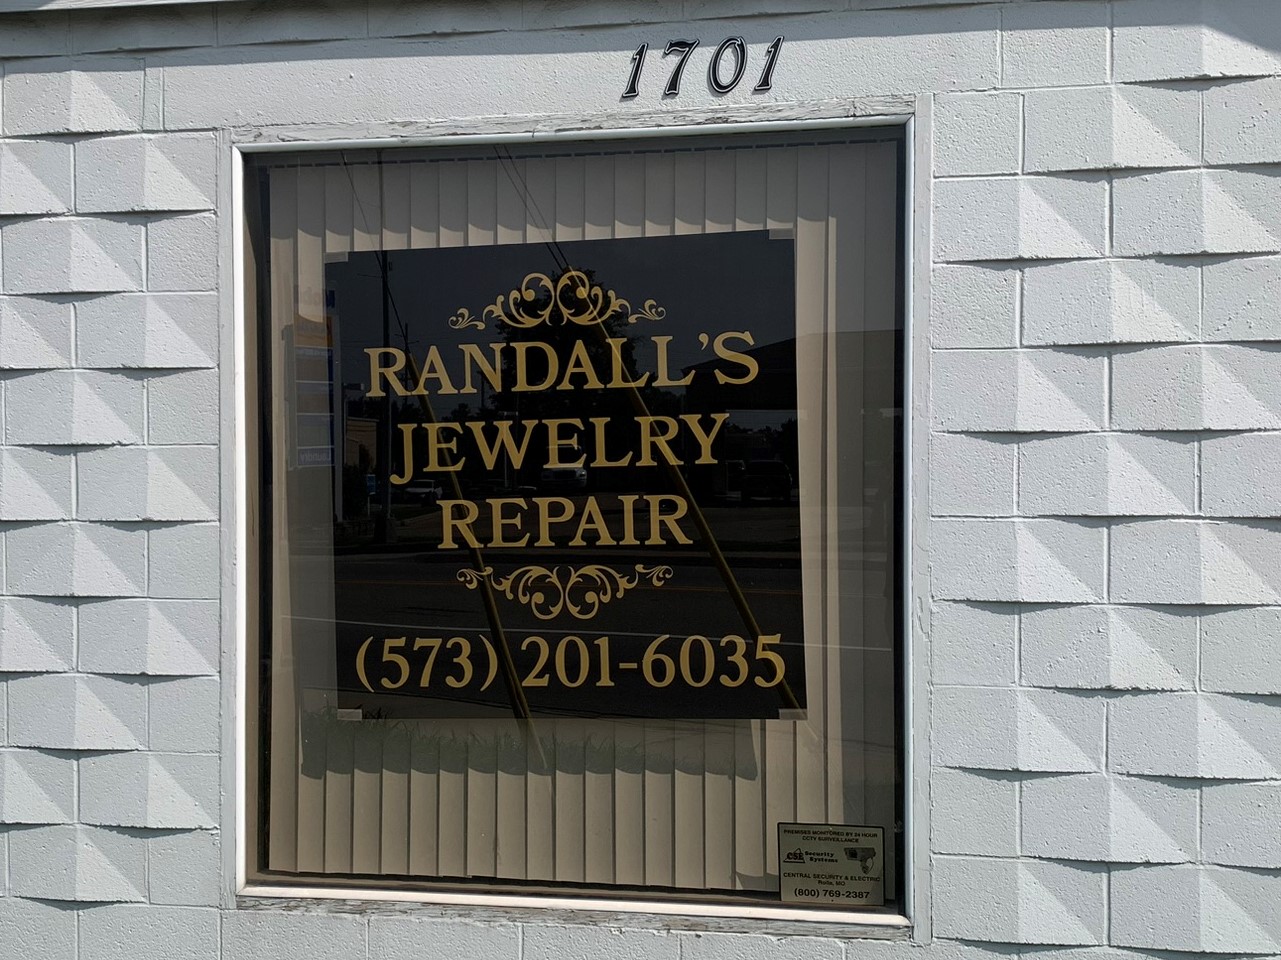 Randall's Jewelry Repair